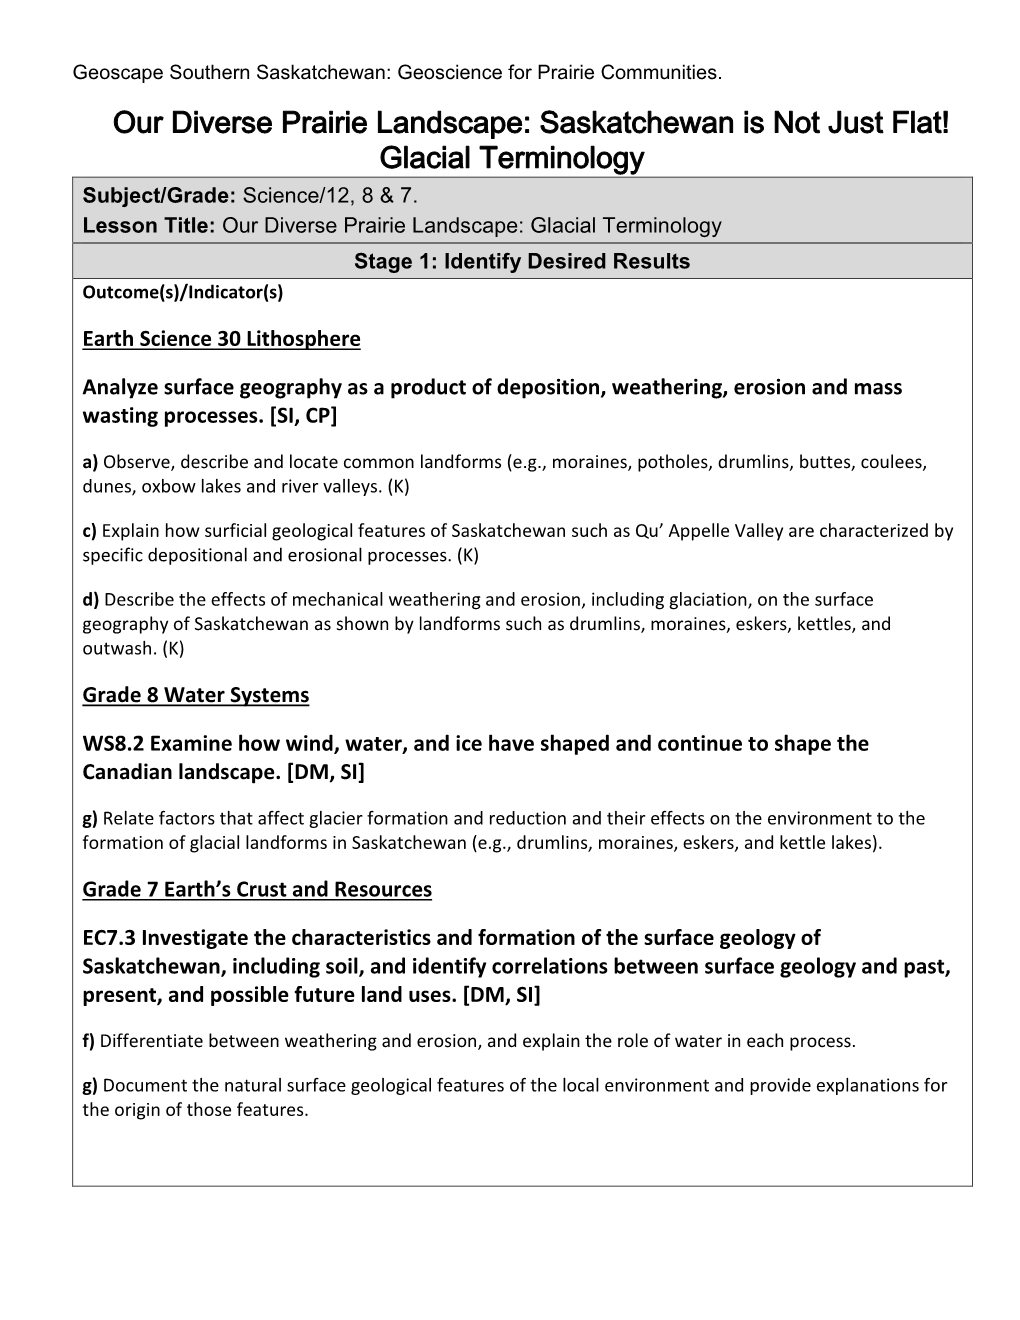 Glacial Terminology Subject/Grade: Science/12, 8 & 7